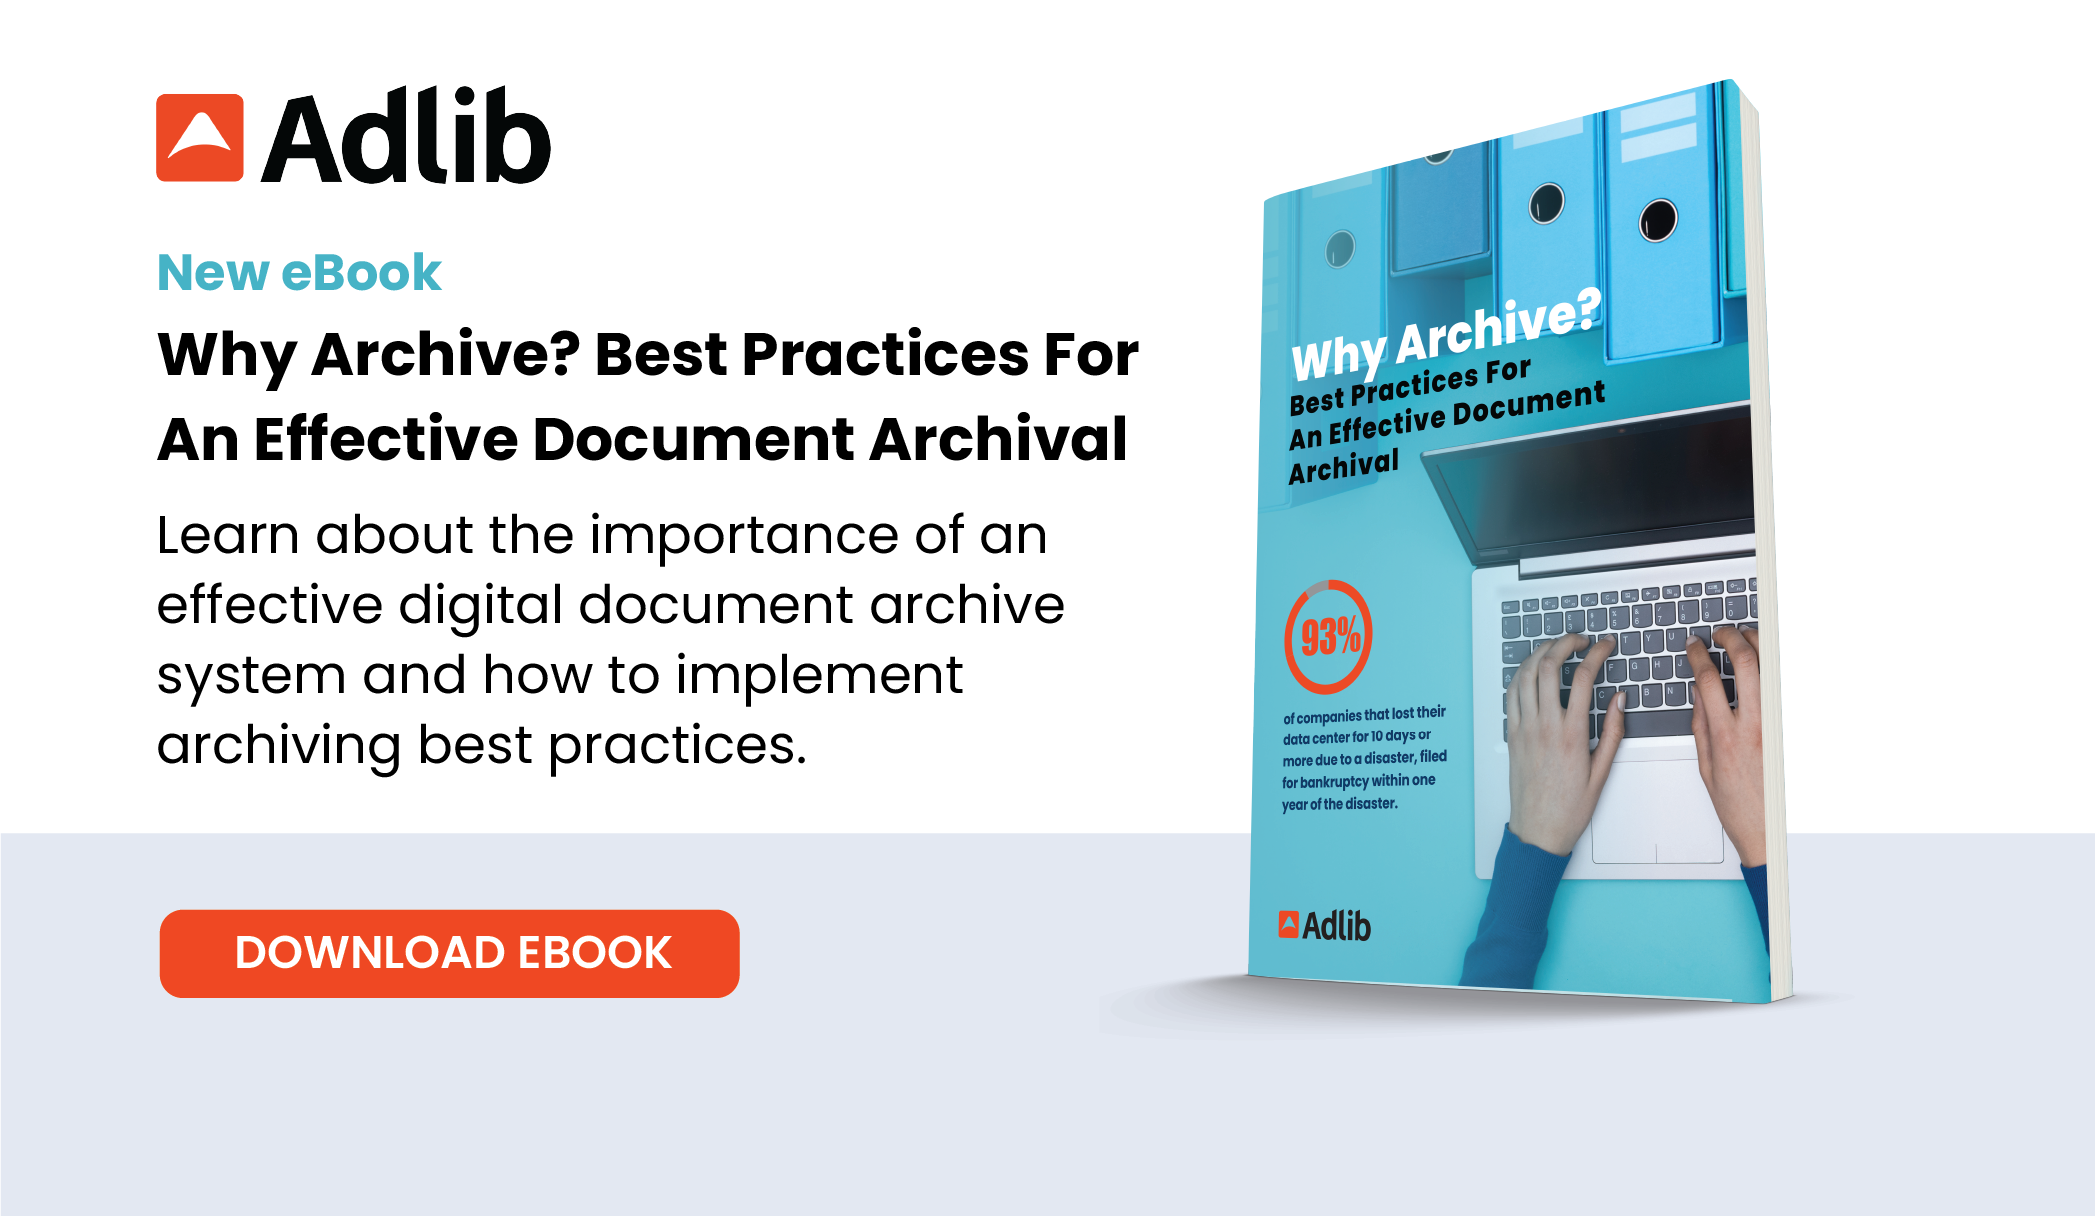 Adlib Whitepaper - Best Practices For Effective Document Archival SOCIAL-1